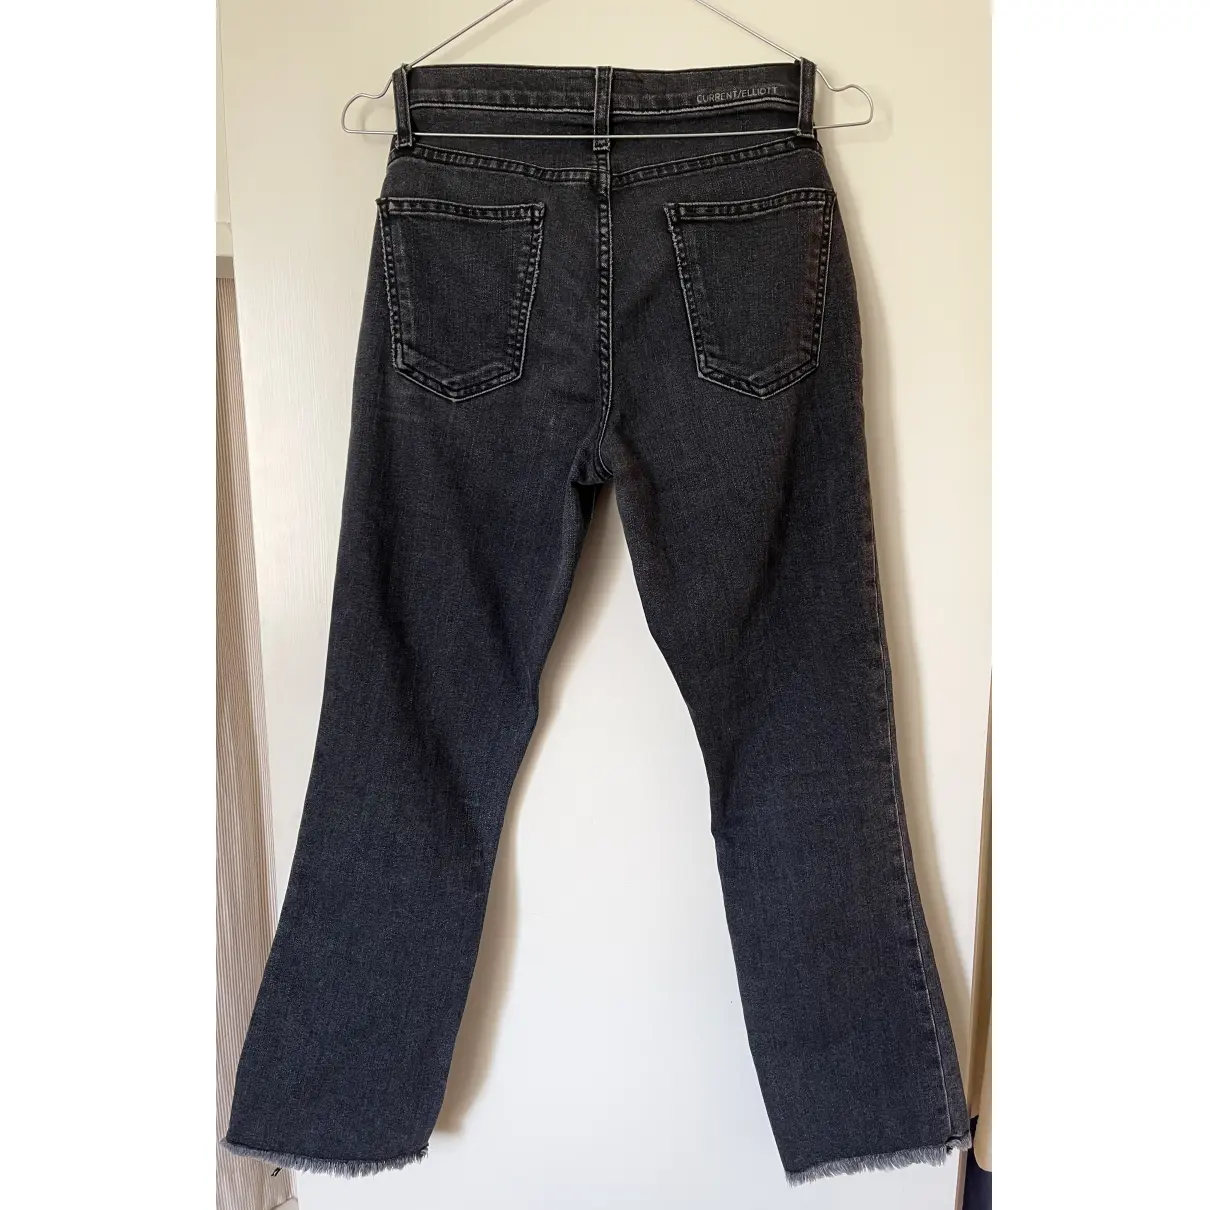 Buy Current Elliott Grey Cotton Jeans online